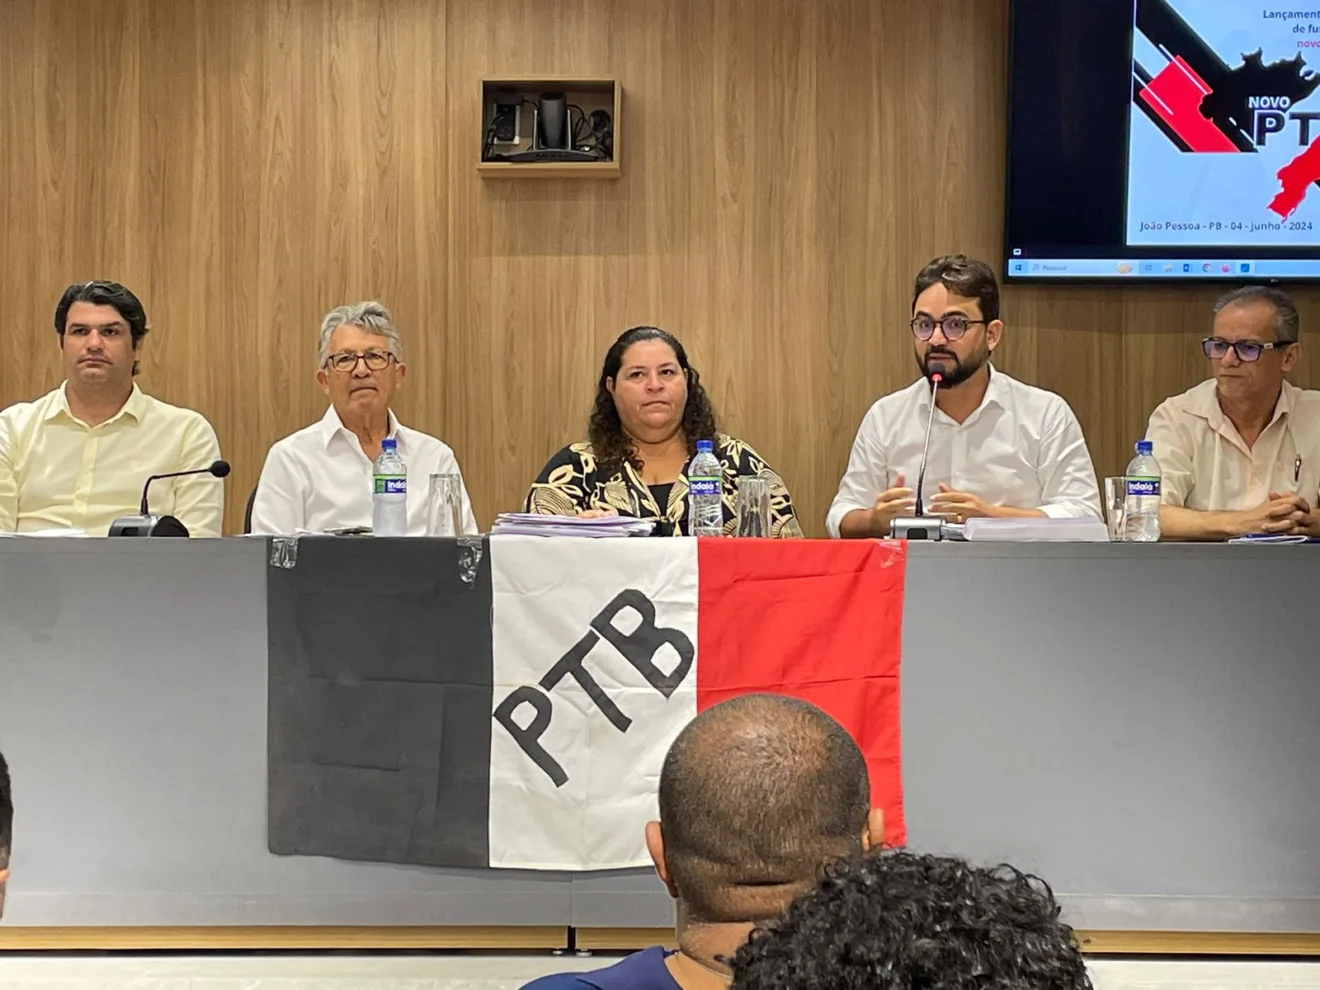 Tibério Limeira comemora relançamento do PTB na Paraíba: “Temos que fortalecer a esquerda”